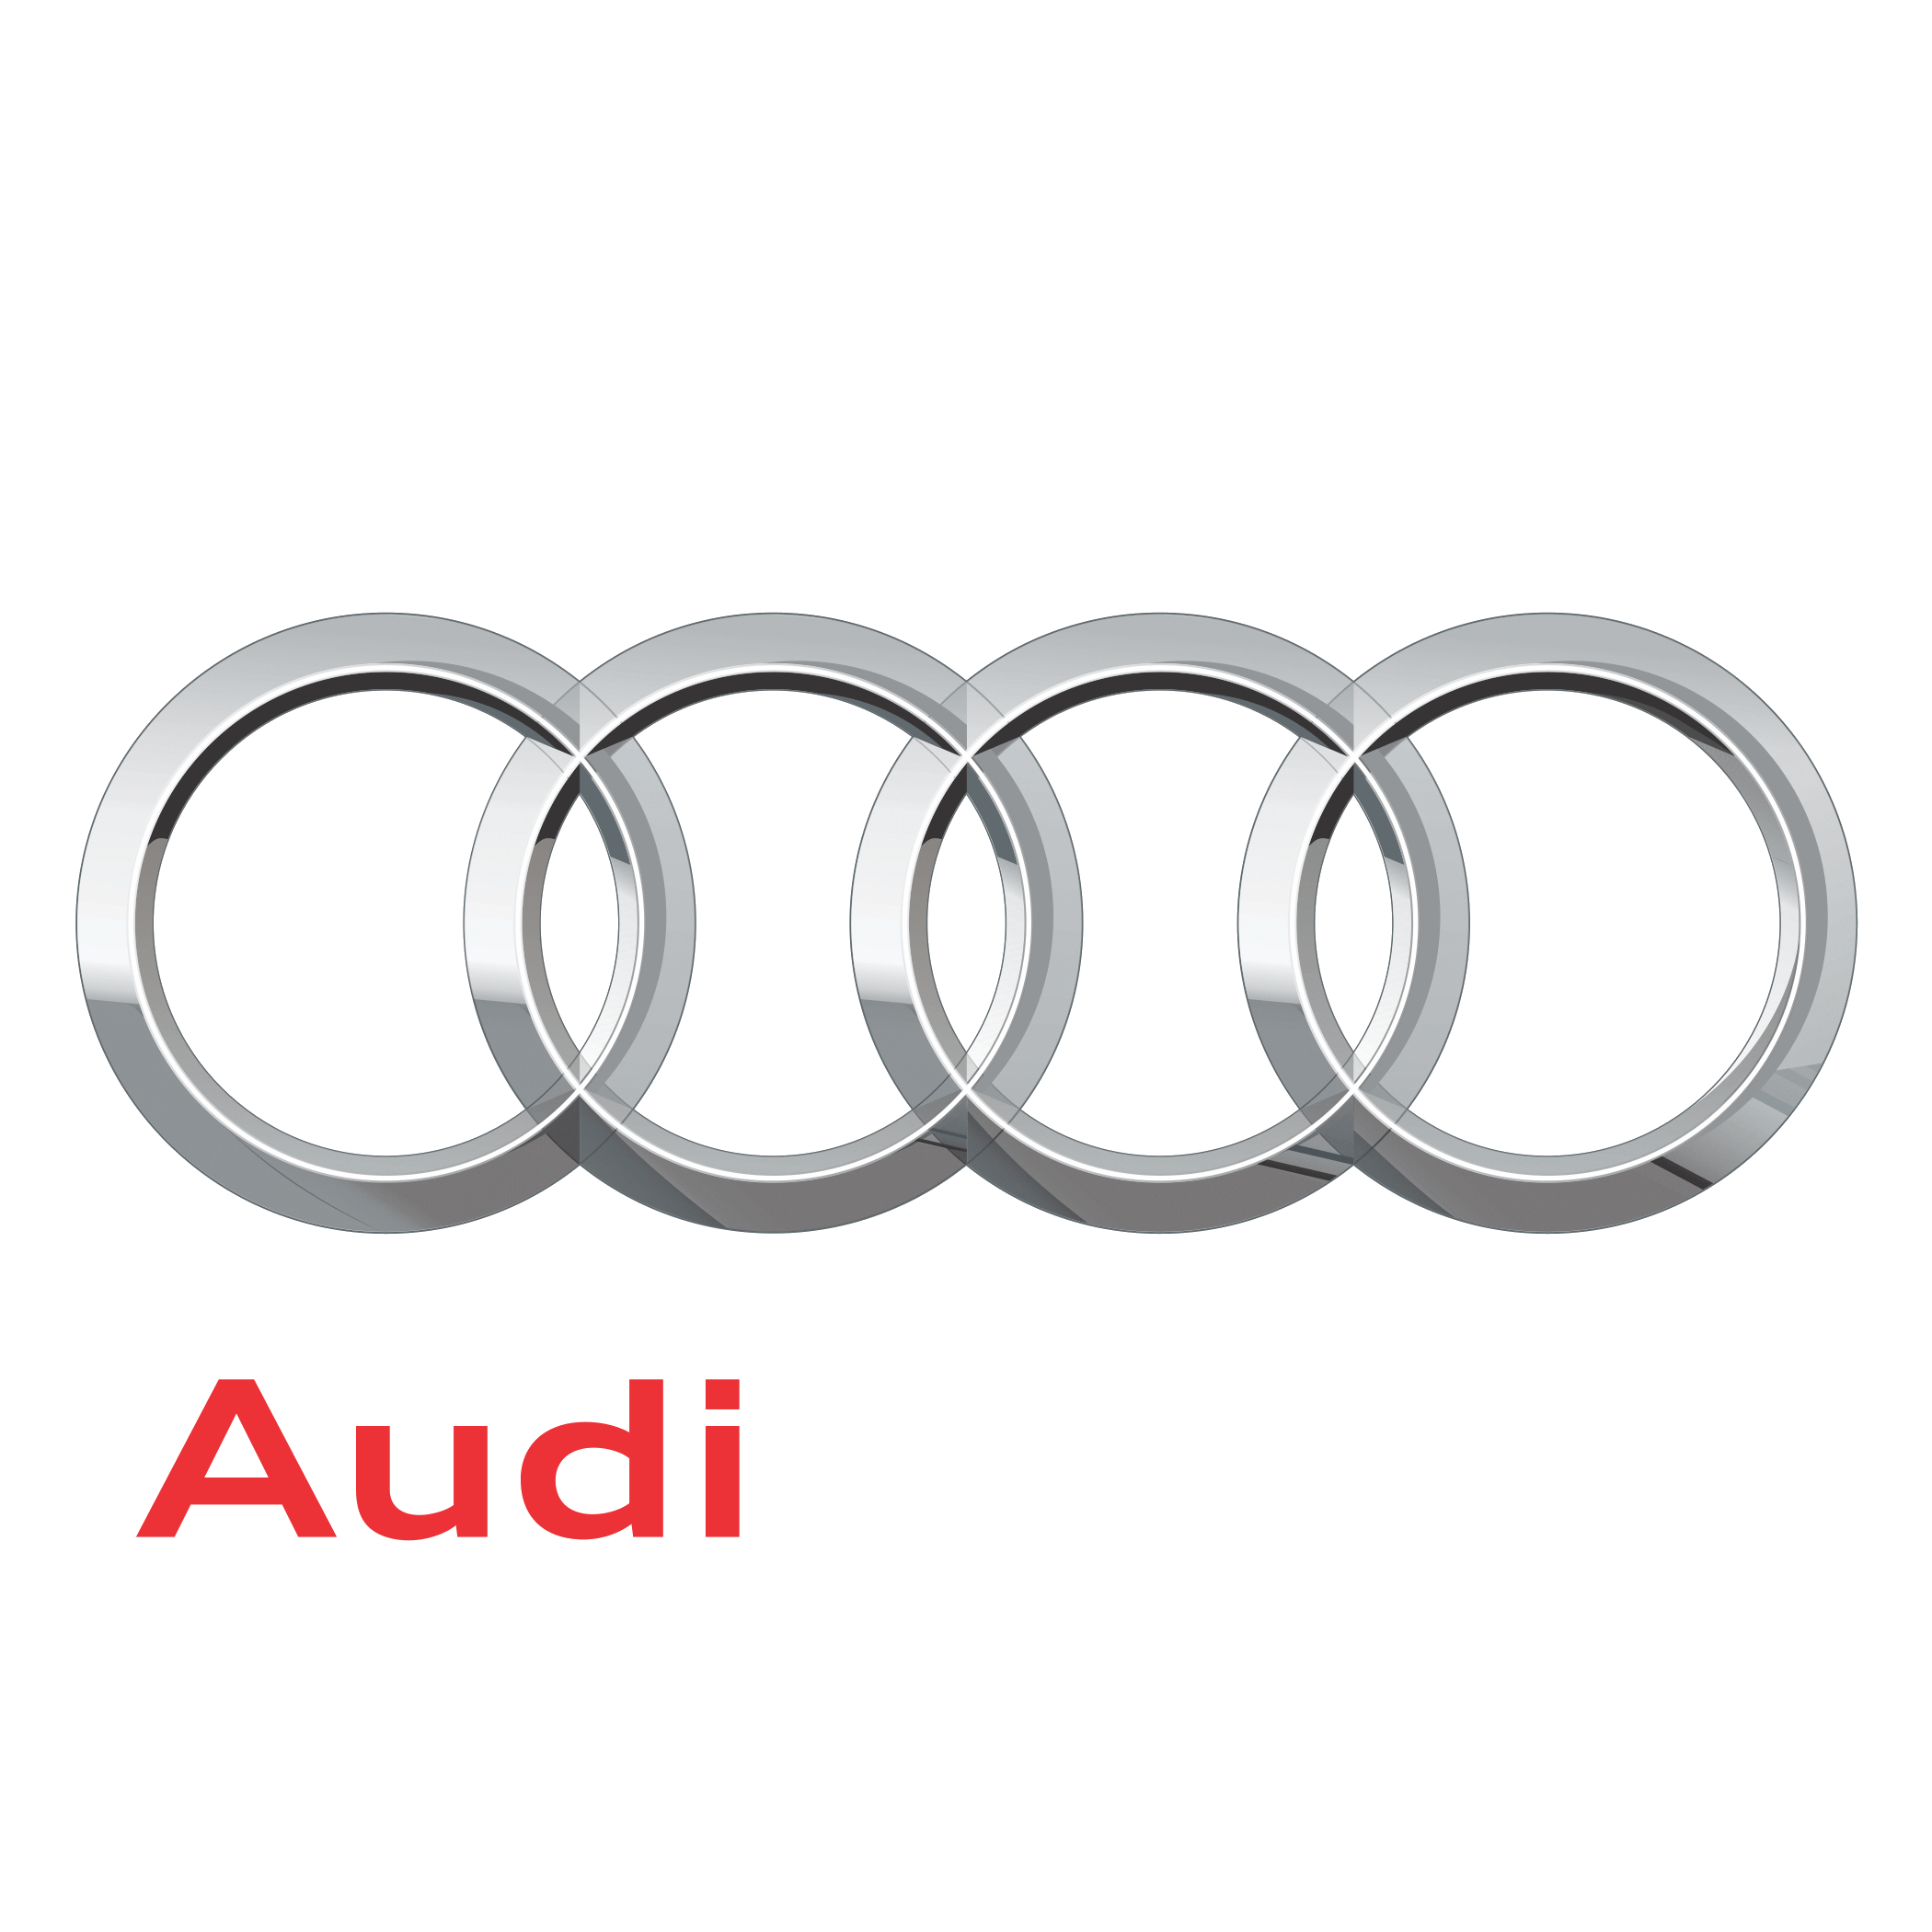 Audi Car Logo Wallpapers Top Free Audi Car Logo Backgrounds Wallpaperaccess